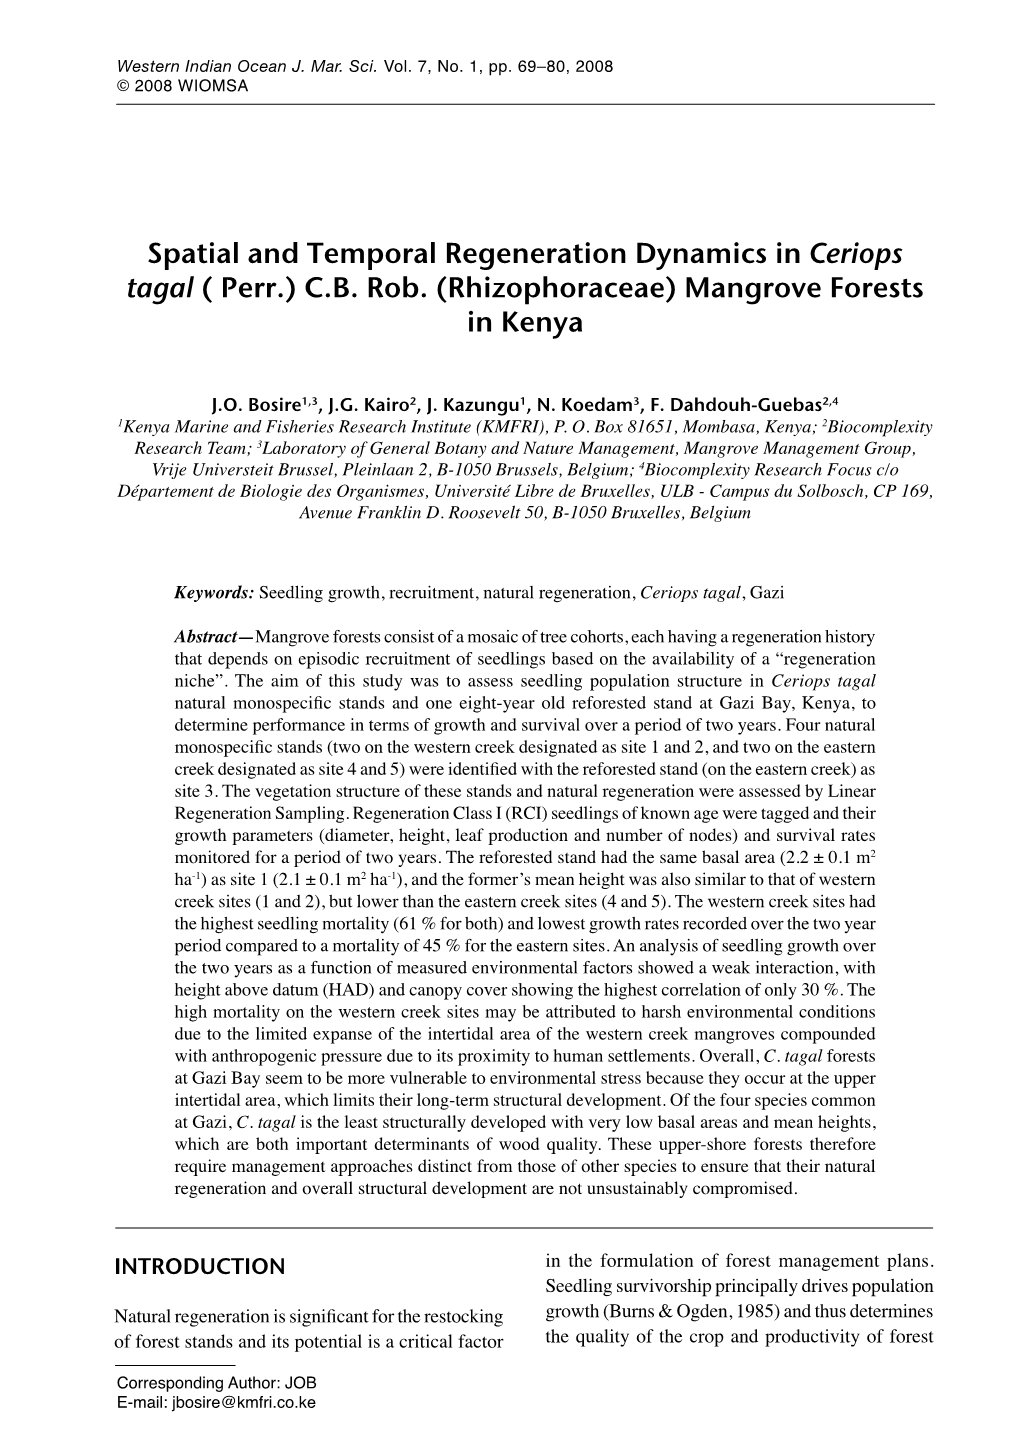 Spatial and Temporal Regeneration Dynamics in Ceriops Tagal ( Perr.) C.B